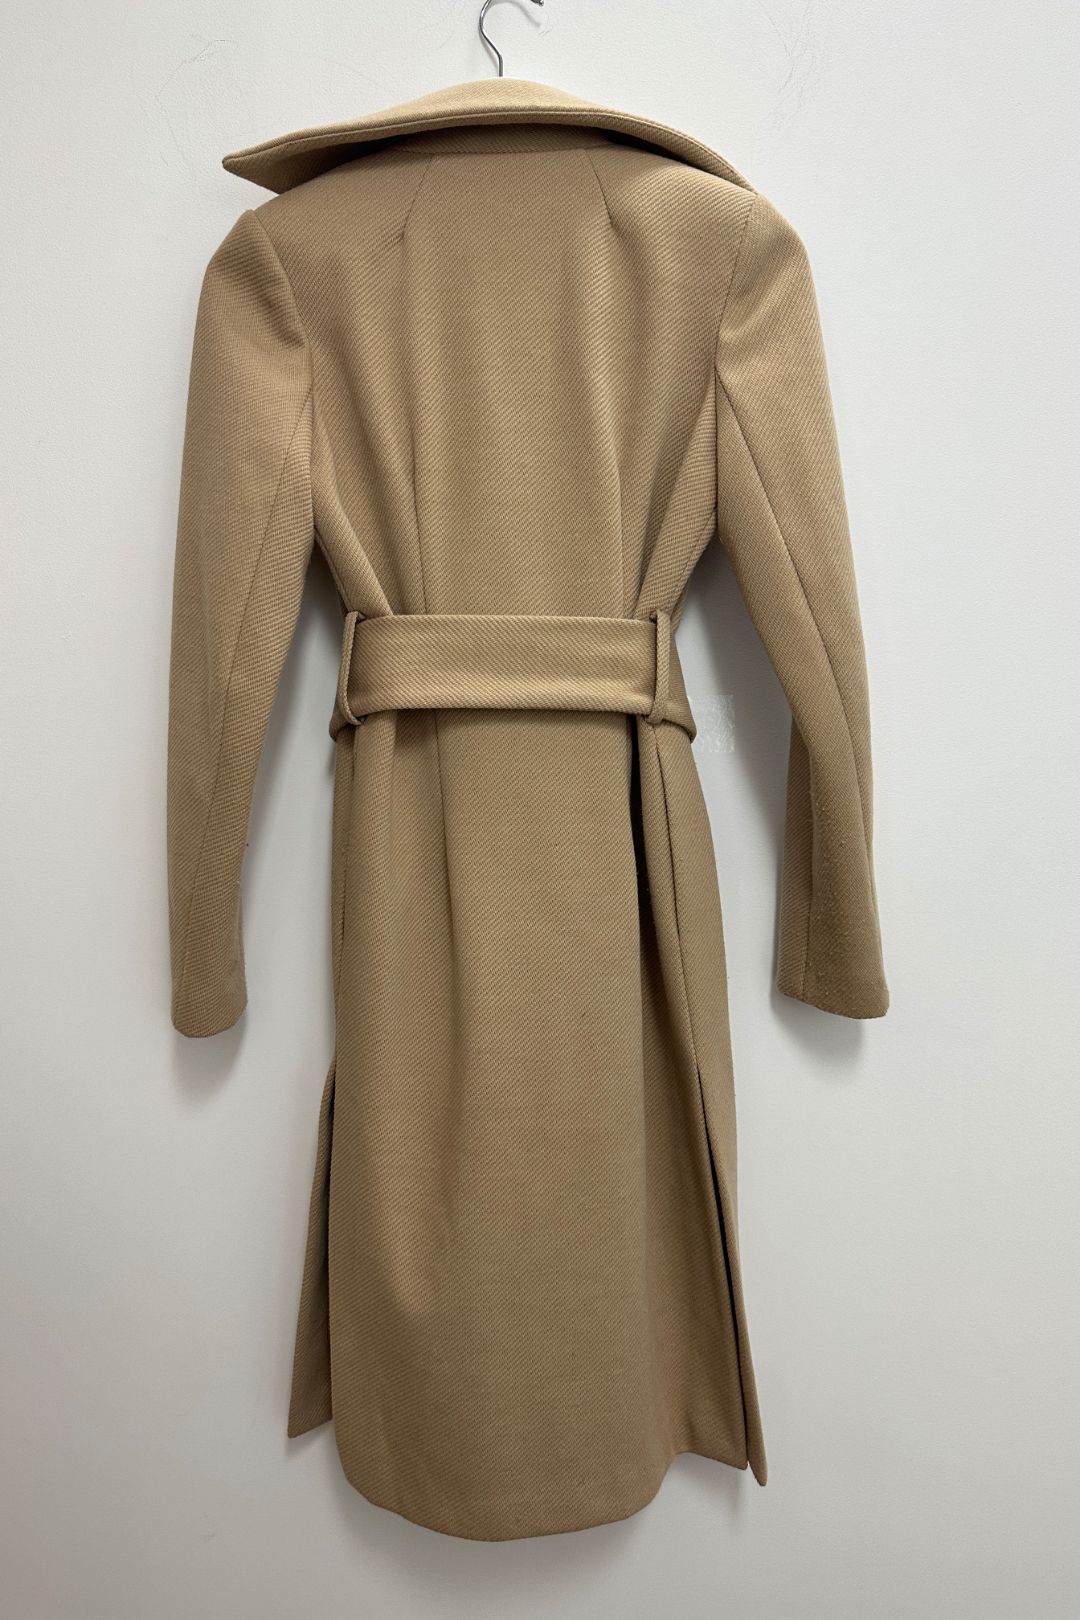 Sheike Beige Long Sleeved Winter Coat